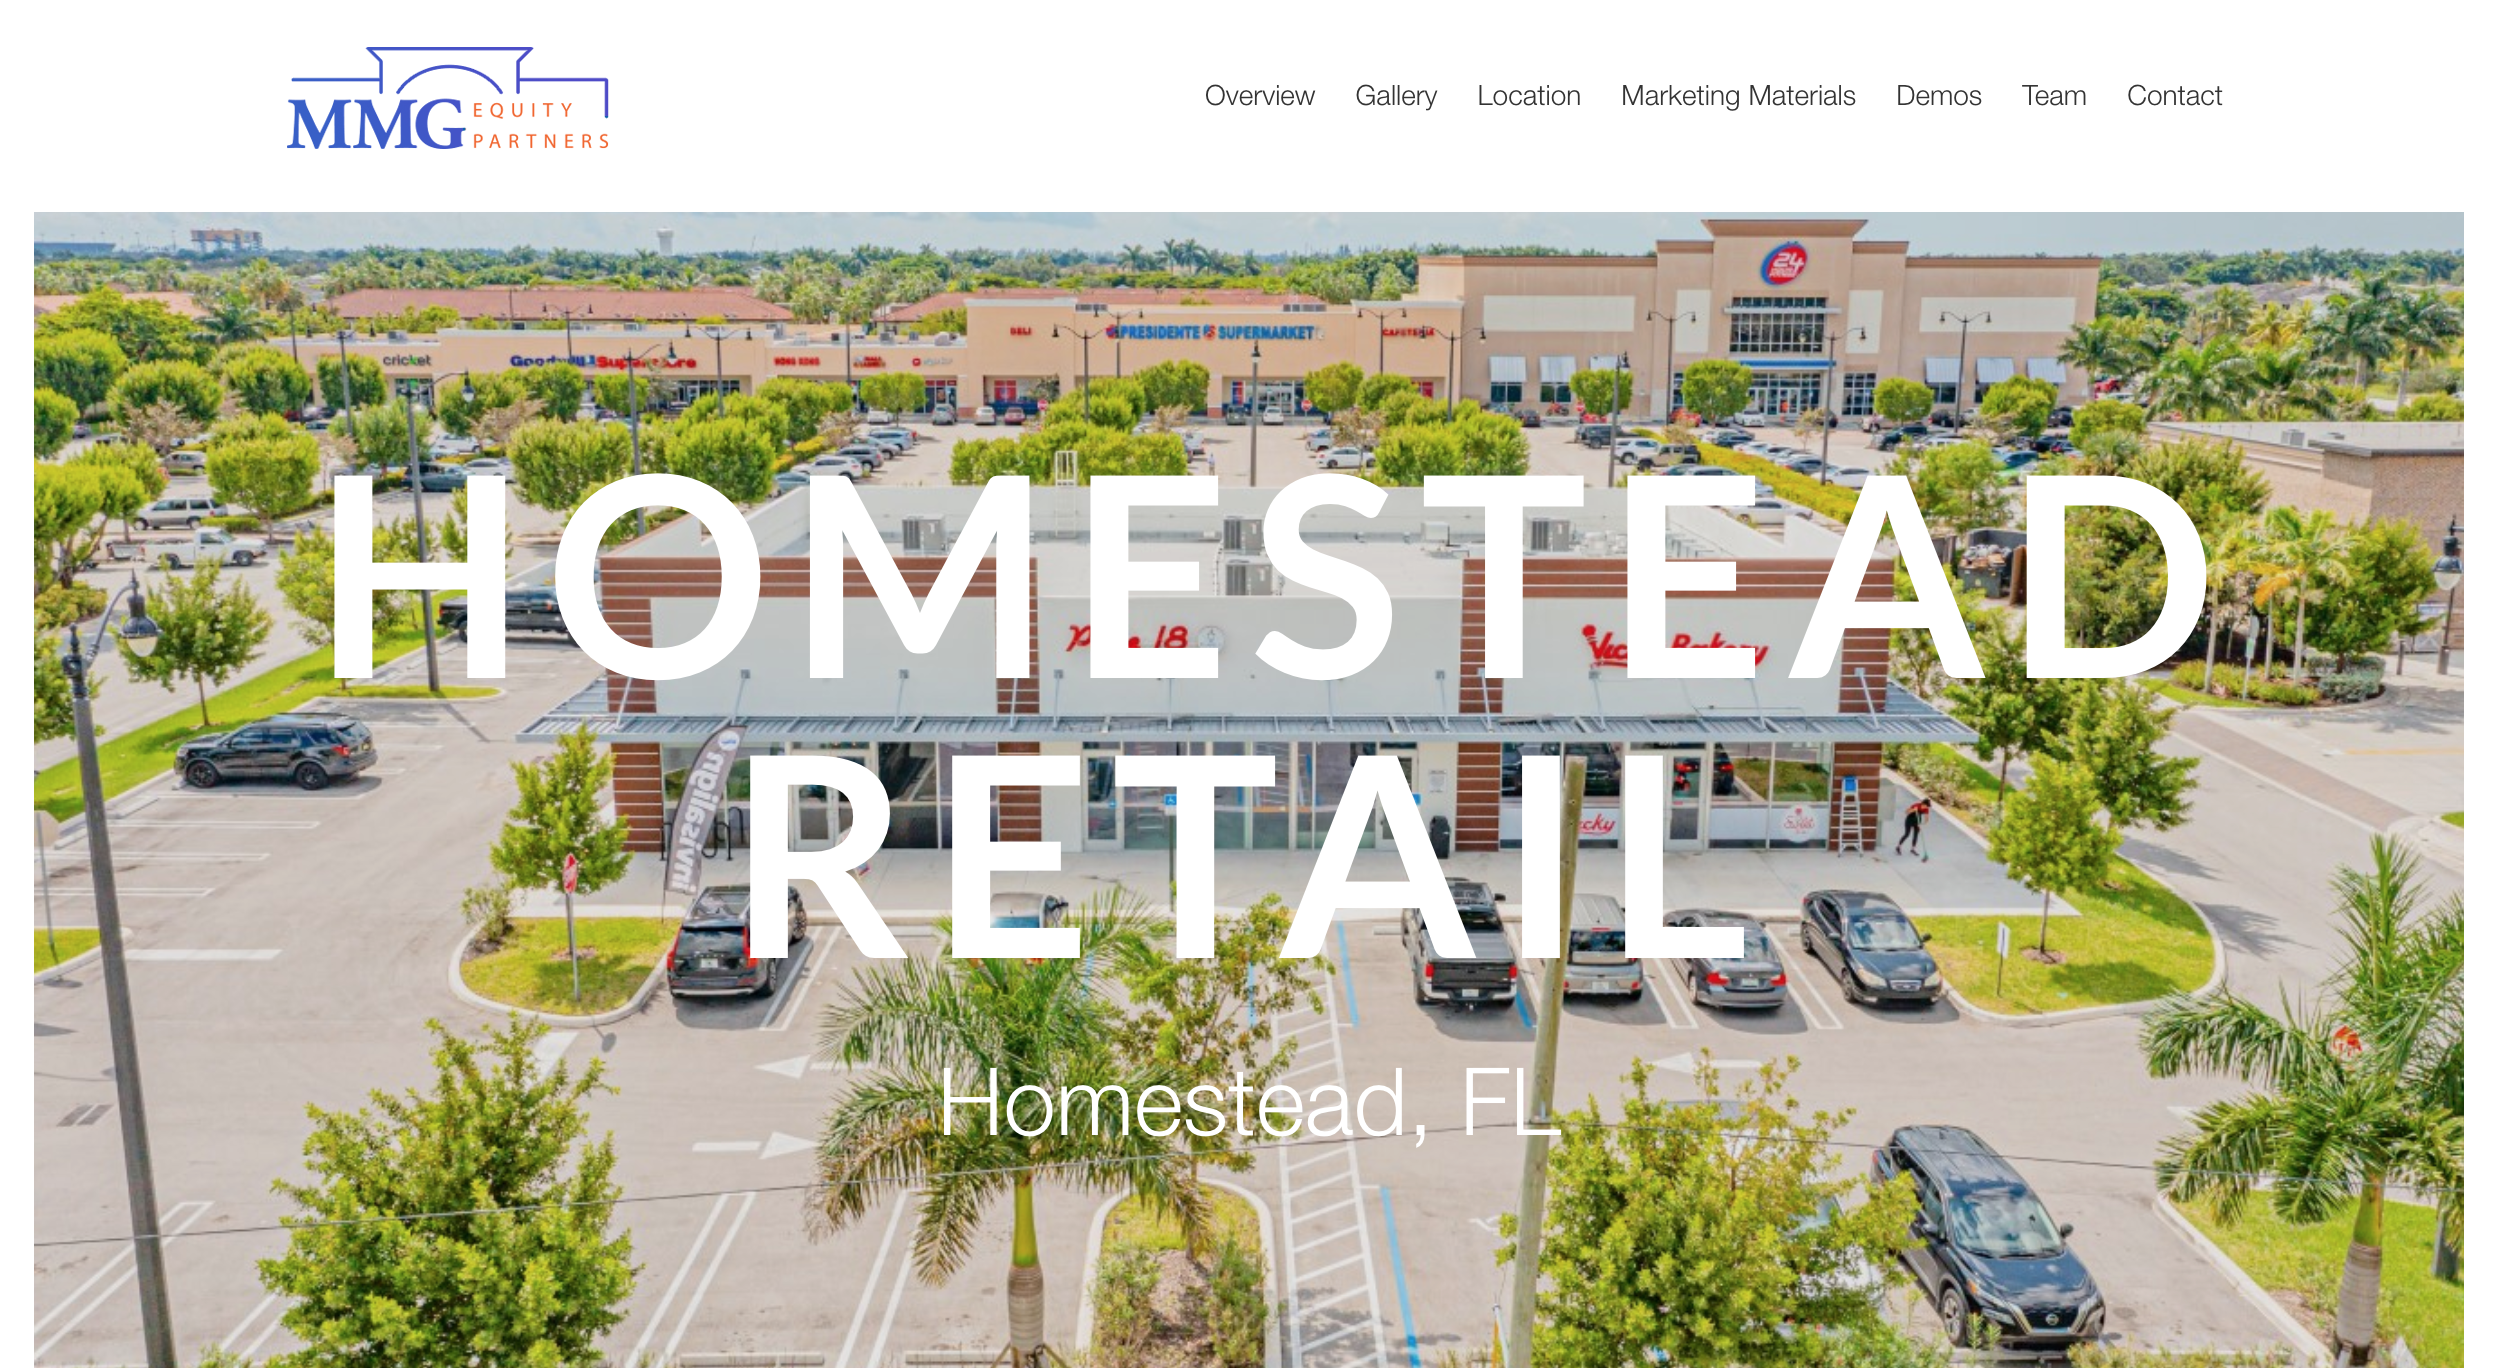 Homestead Florida Retail Real Estate - Best Real Estate Website Designs